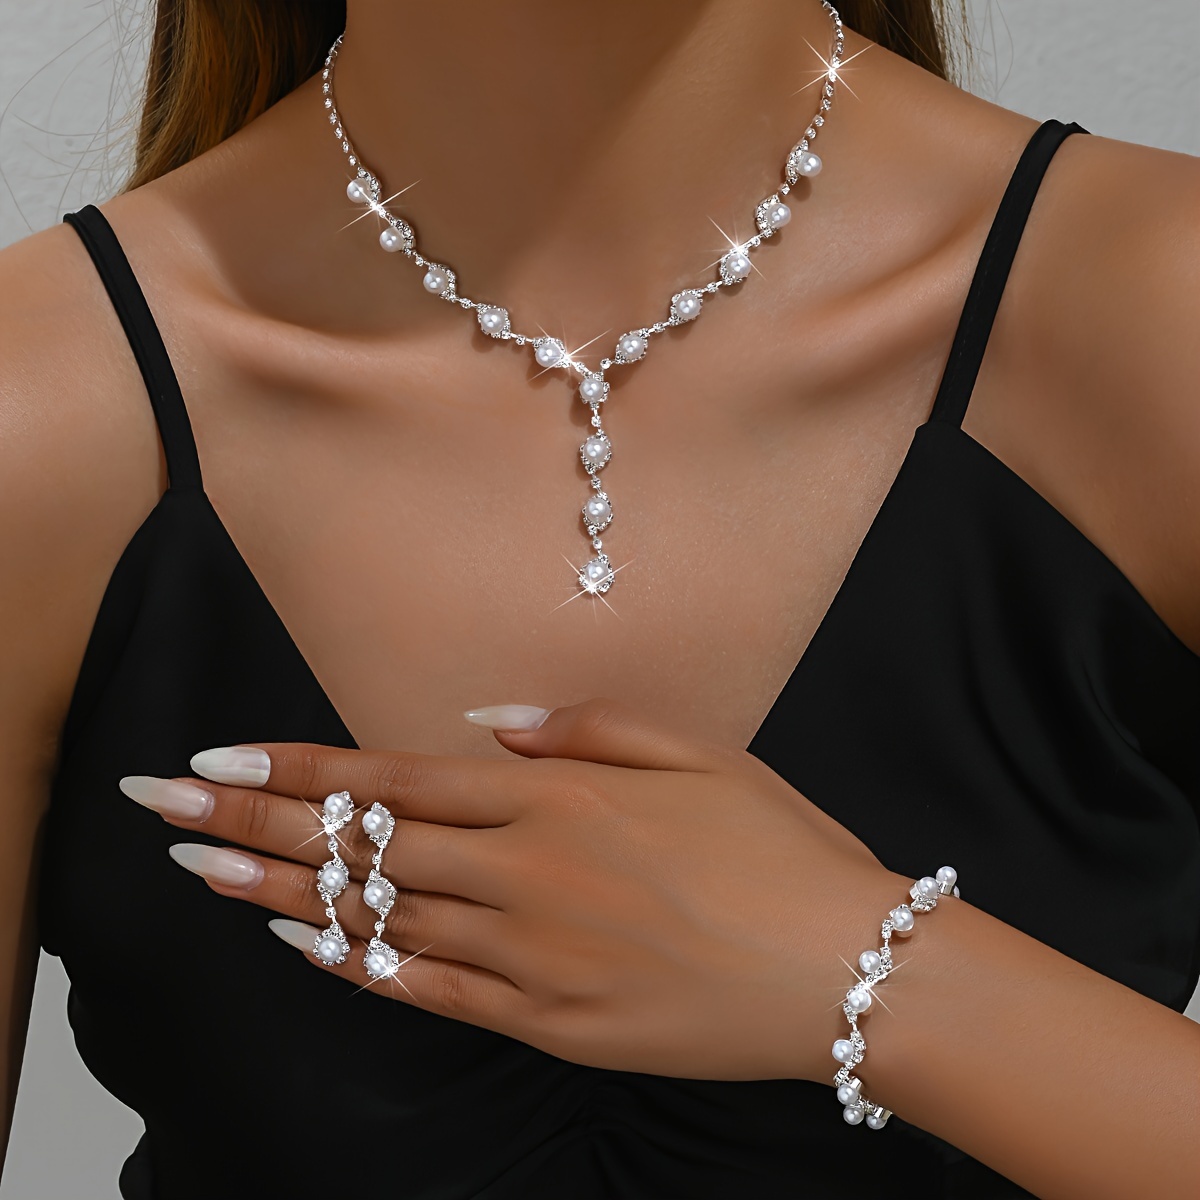 

Dangle Earrings + Necklace + Bracelet Elegant Jewelry Set Silver Plated Paved Rhinestone Engagement, Wedding Jewelry Evening Party Decor